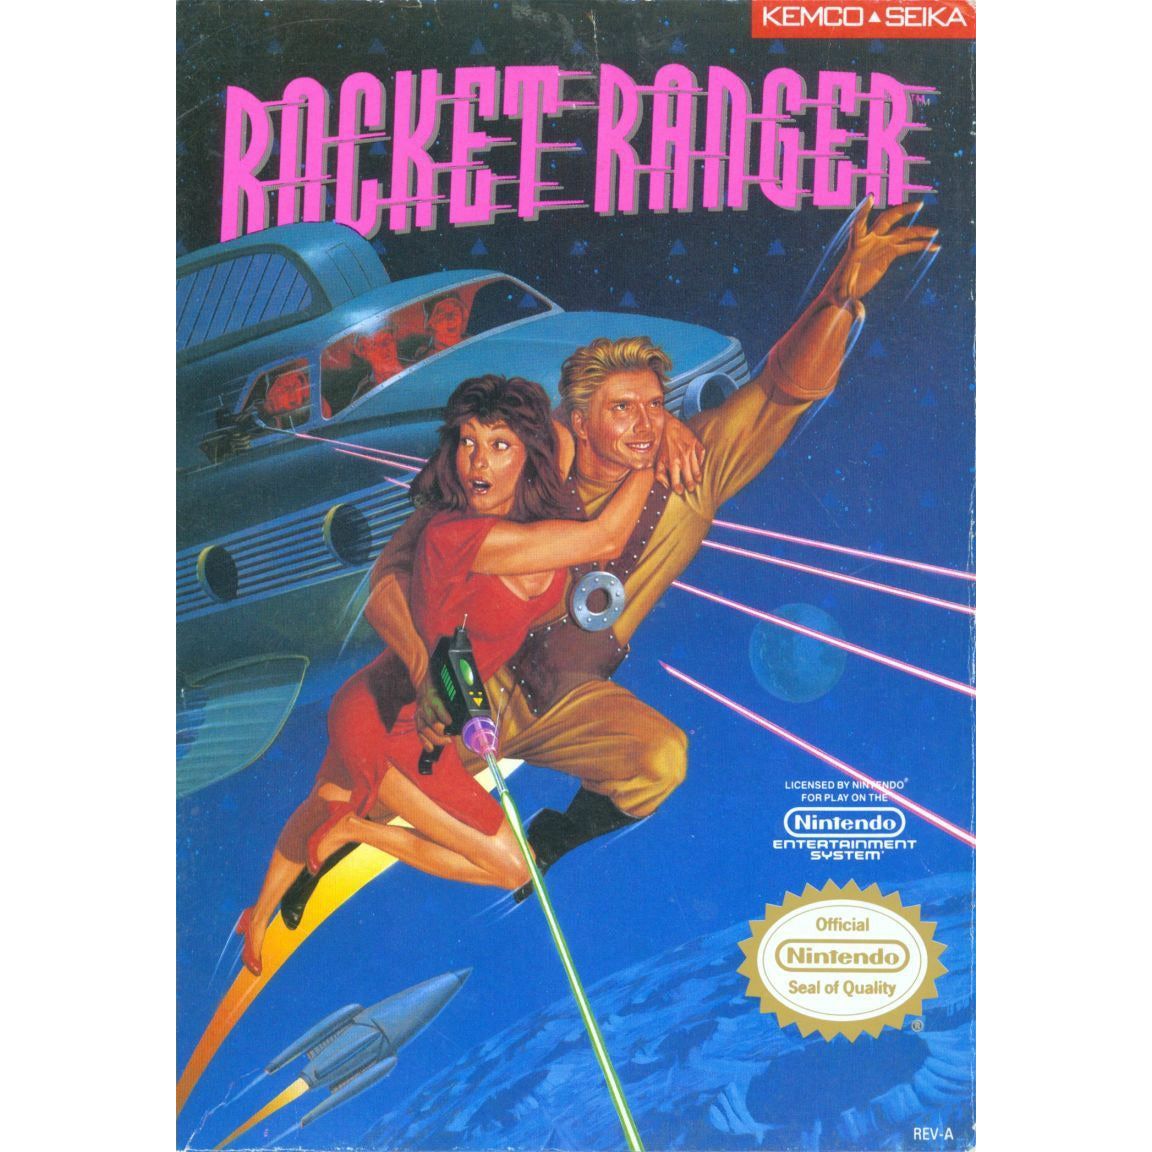 NES - Rocket Ranger (In Box)